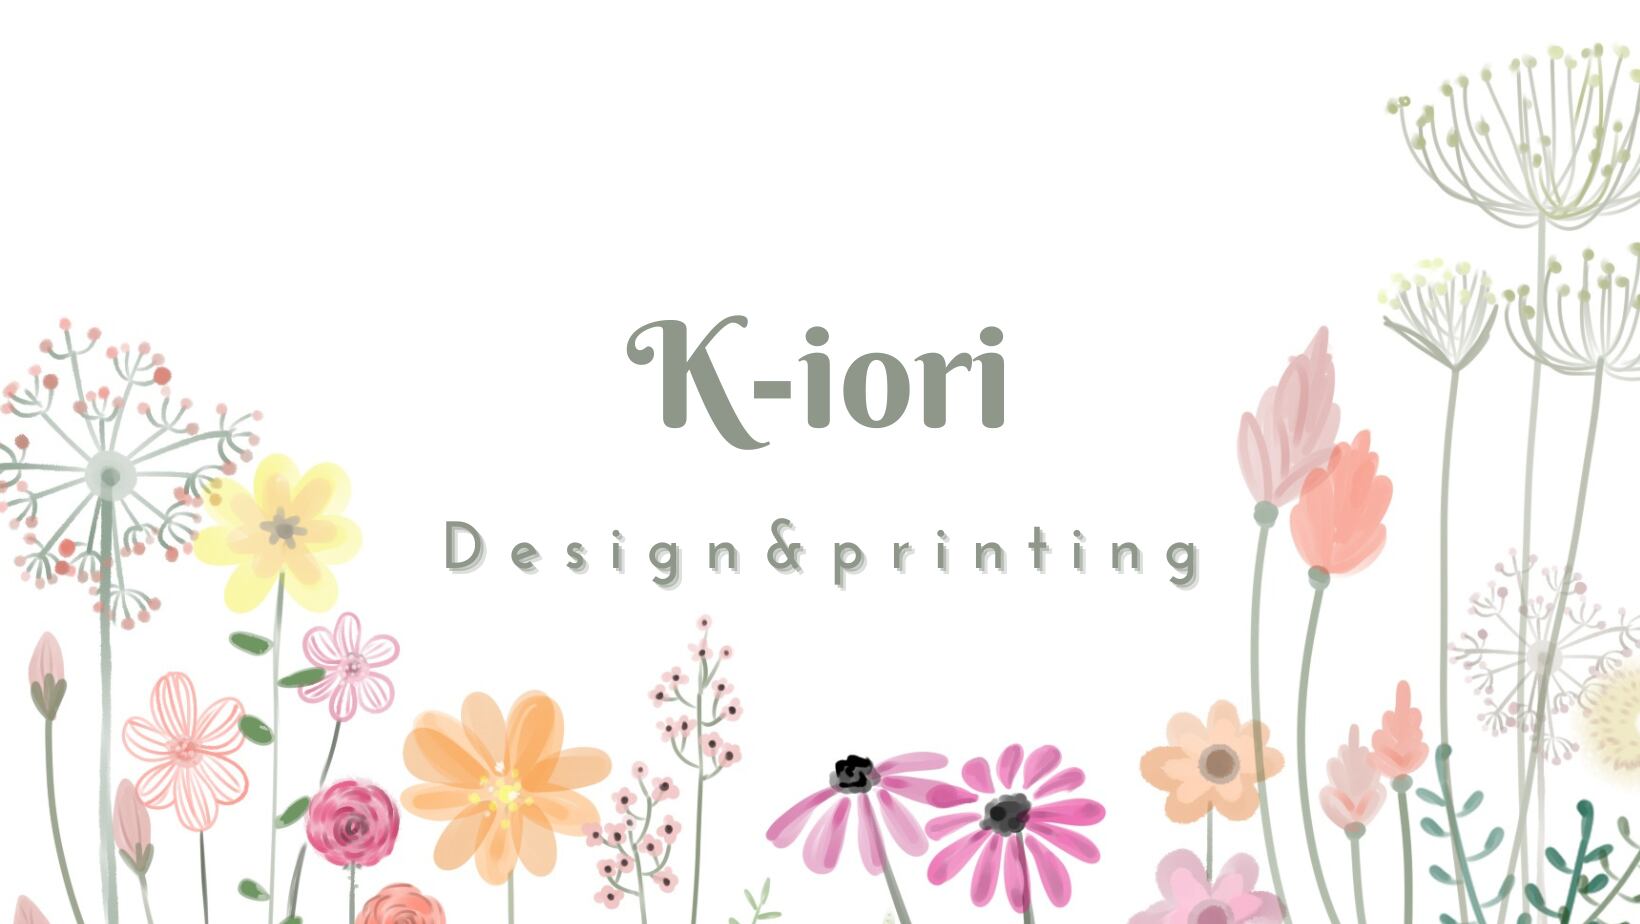 K-iori・design&printing